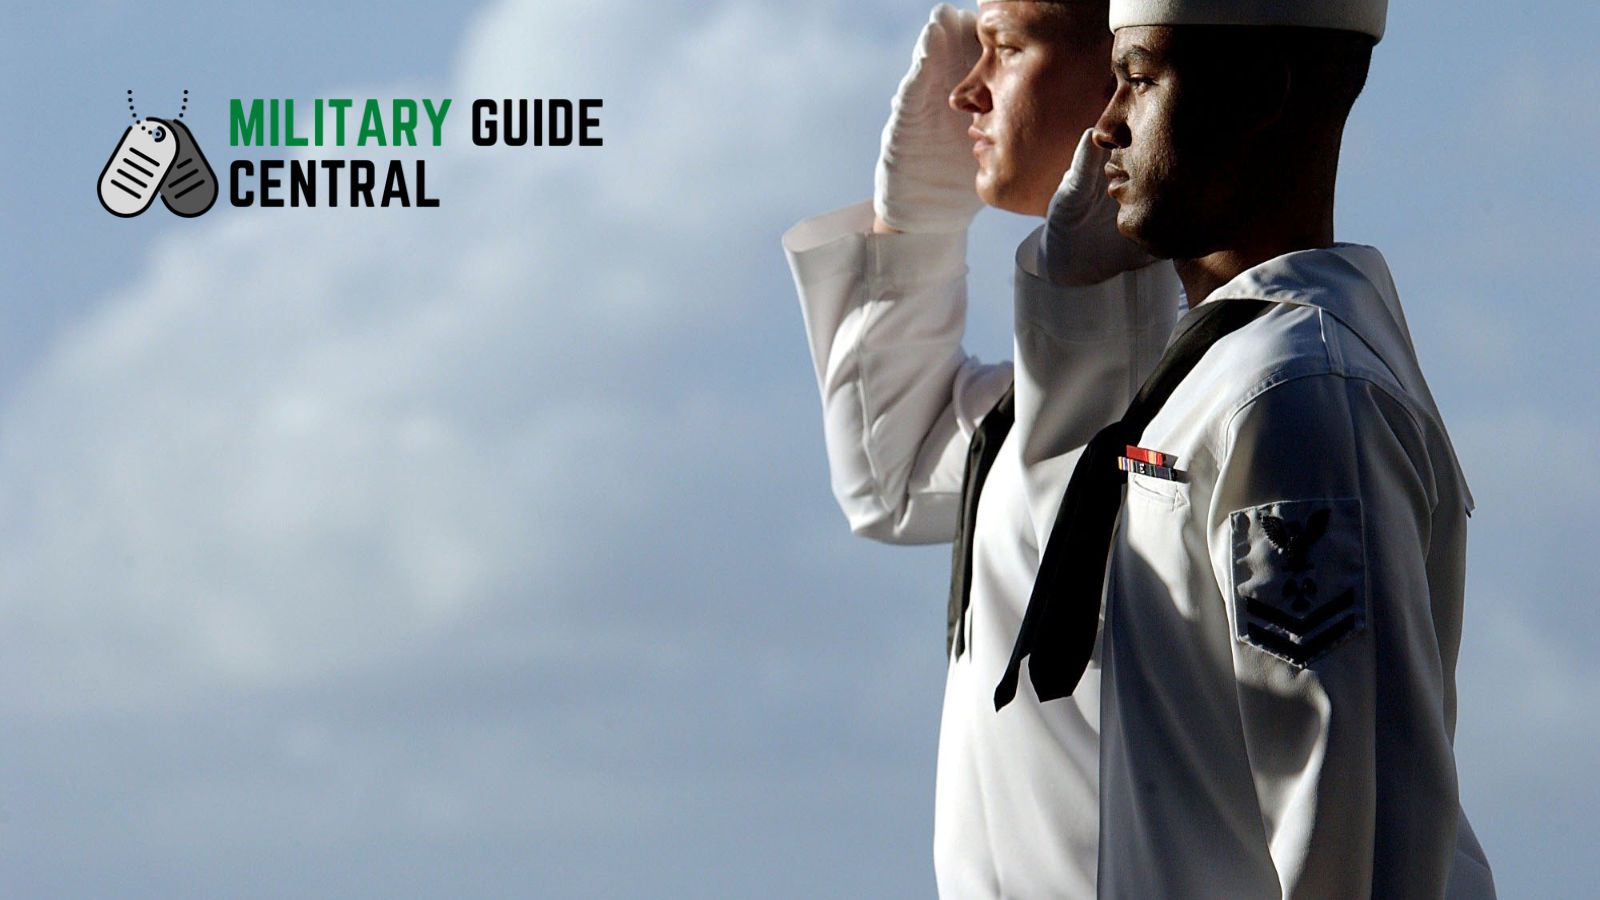 Sailors saluting - militaryguidecentral.com